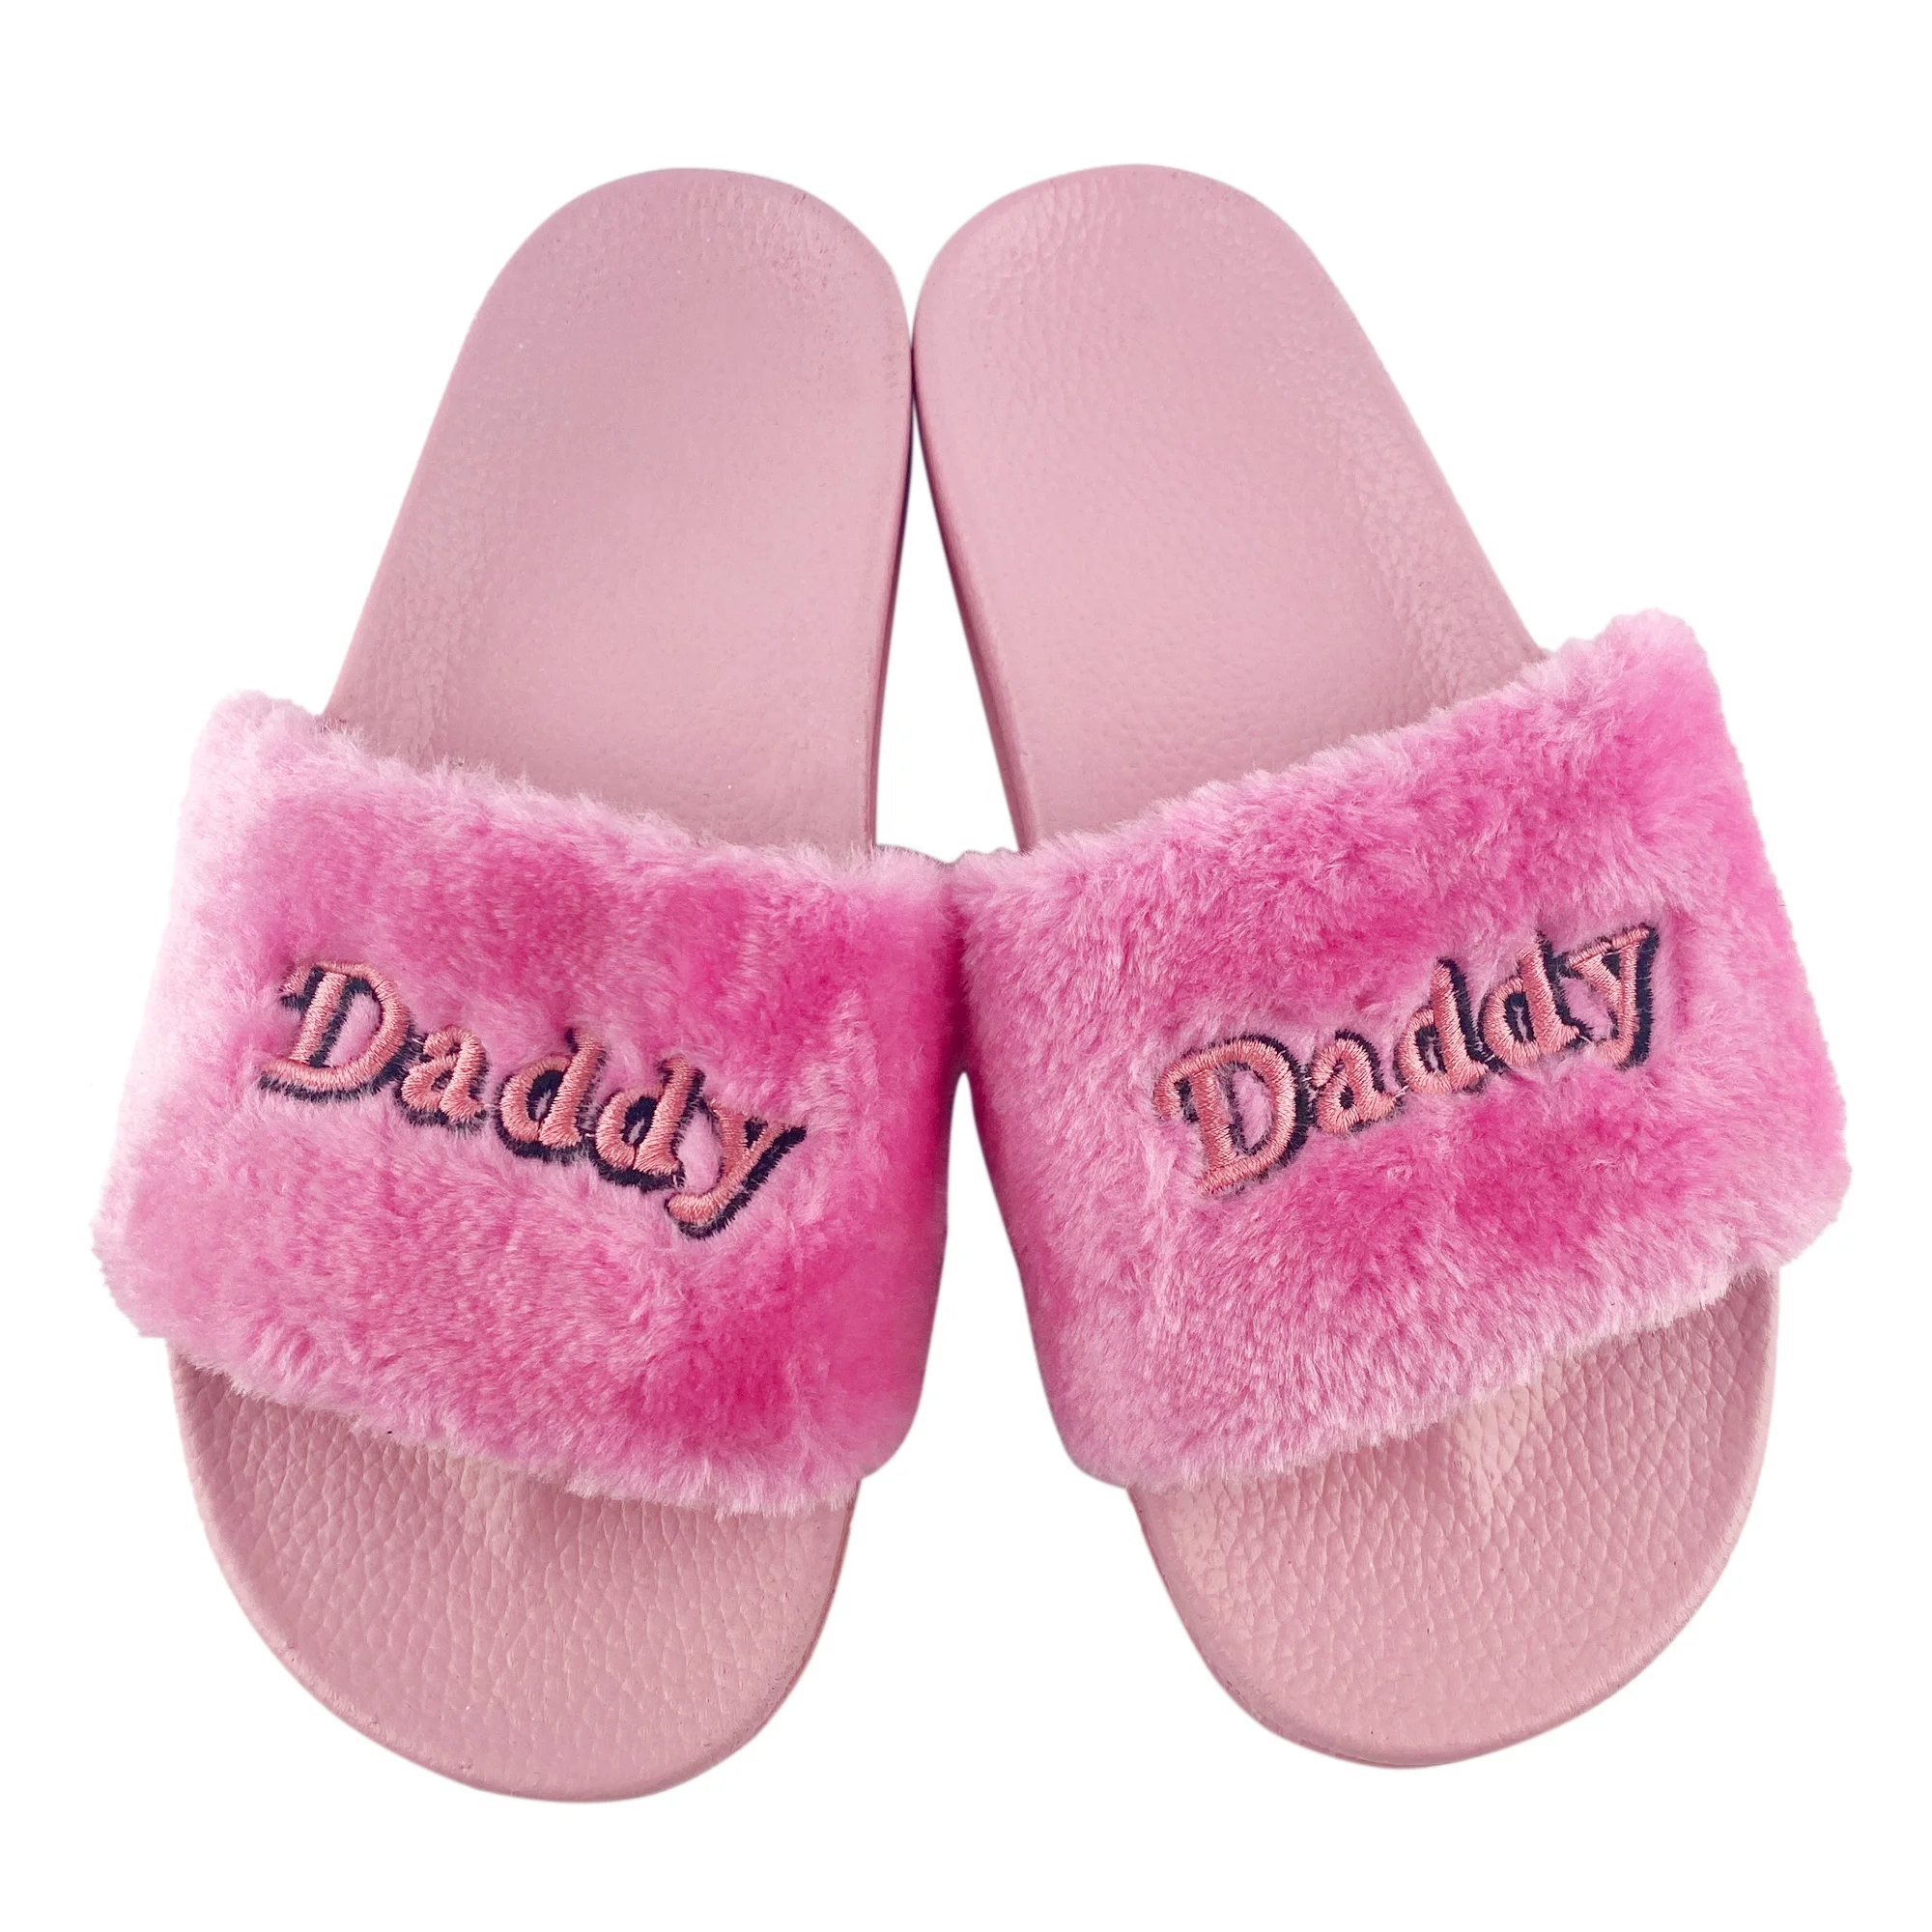 

Greatshoe Ladies Fur slippers girls Slide Sandals Faux Fur pink sandals Slides Slipper Furry Plush Slippers Women